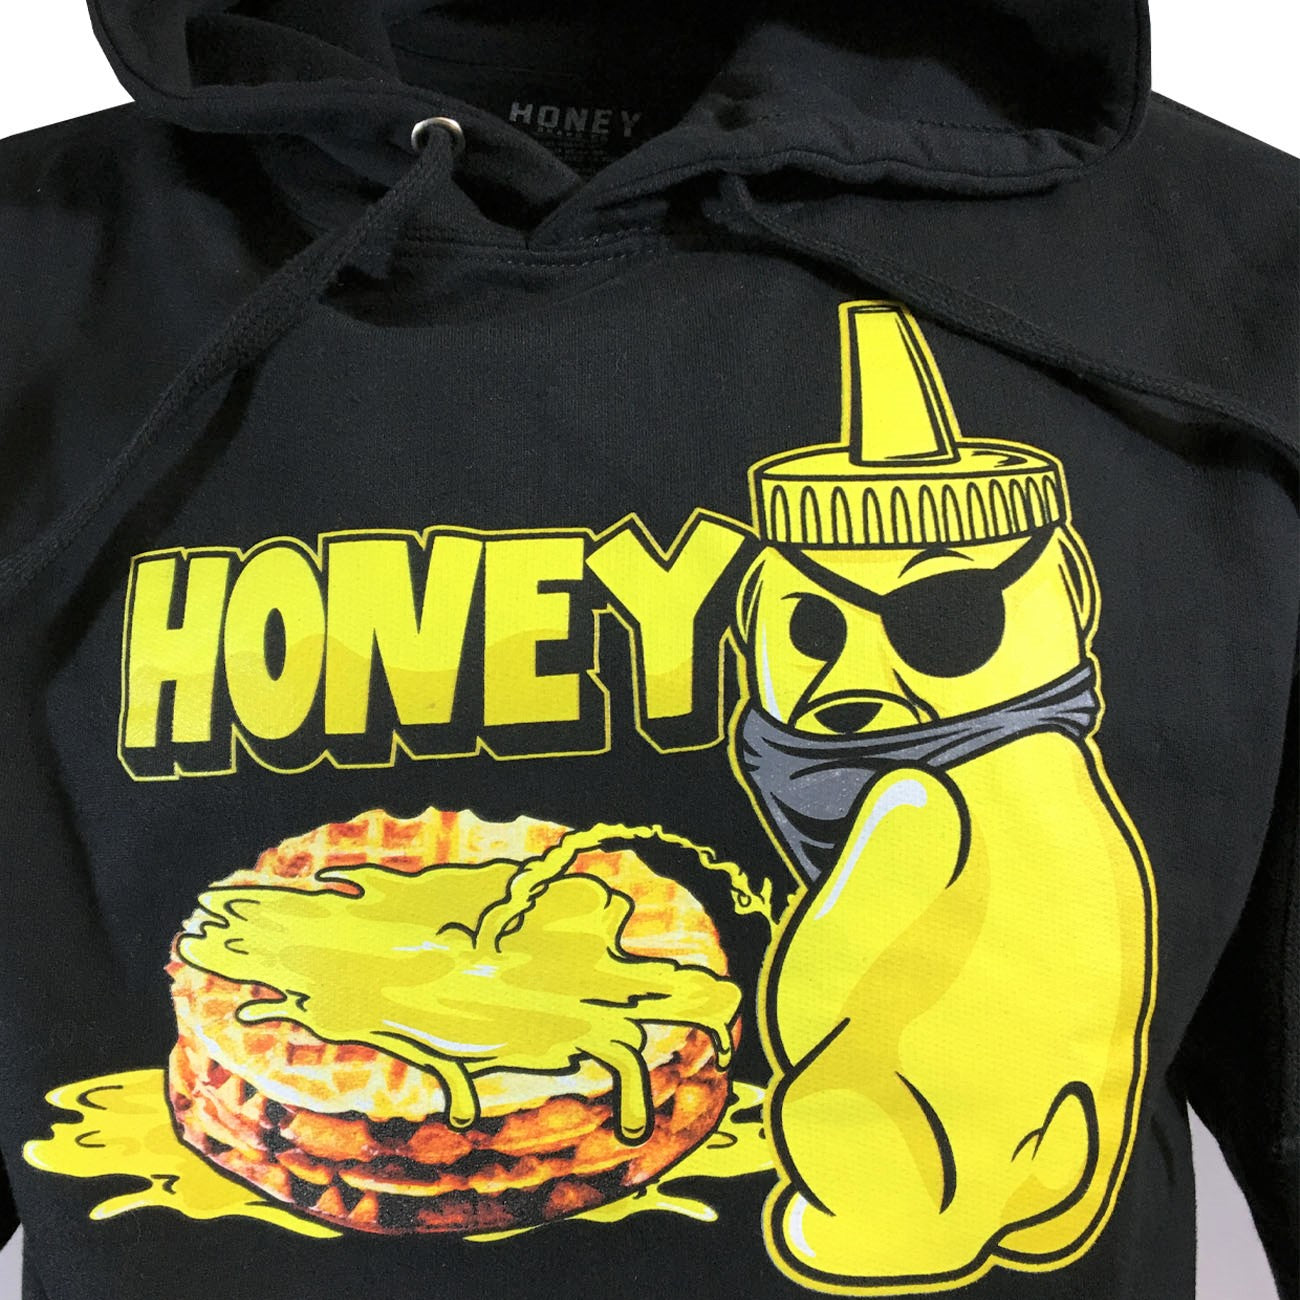 Honey Pullover Hoodie - Men's Sweatshirt - Black with Gold Print